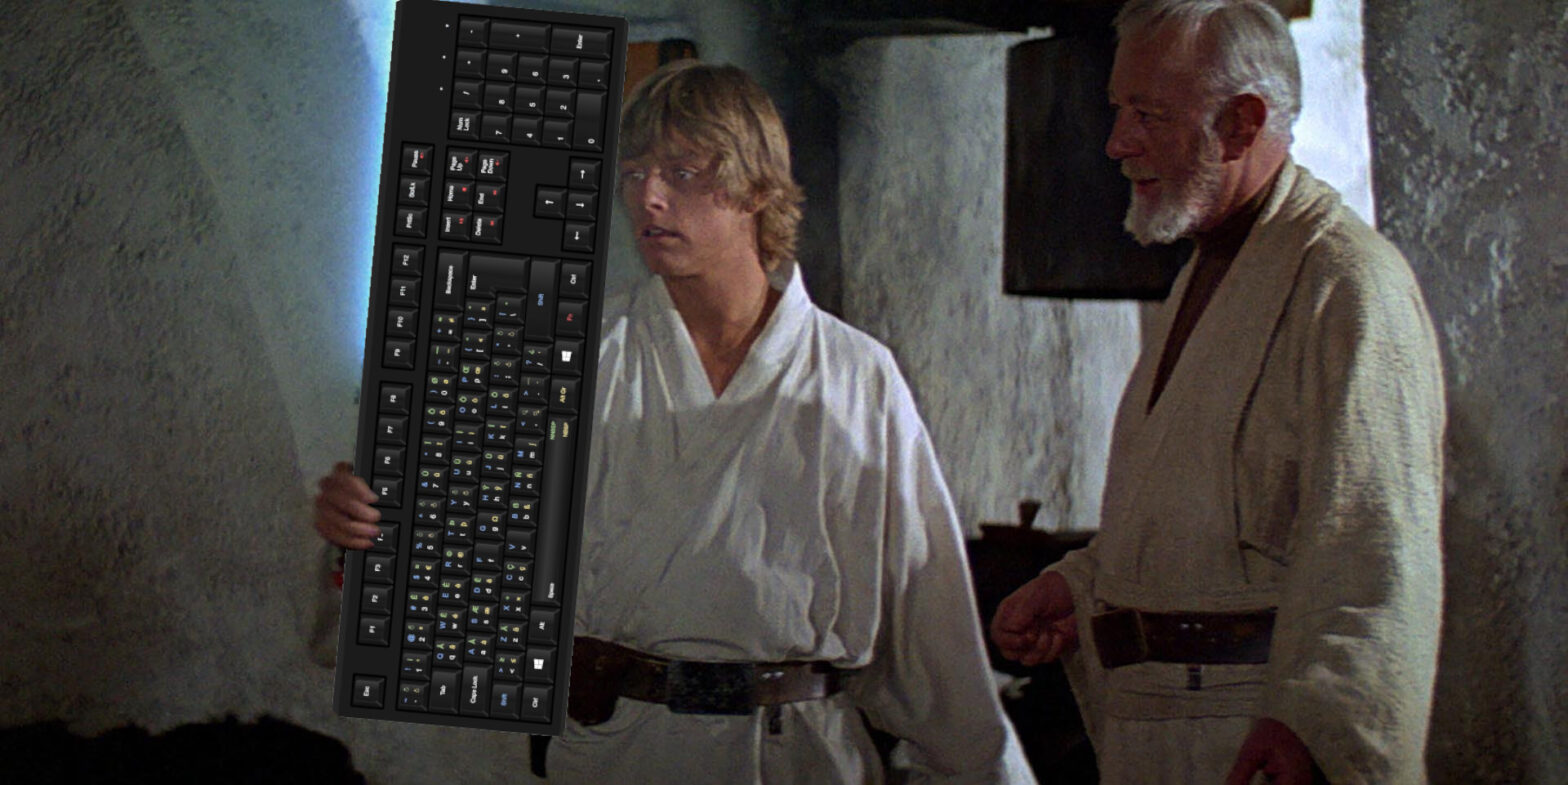 Luke and Obi-Wan Kenobi looking at a keyboard